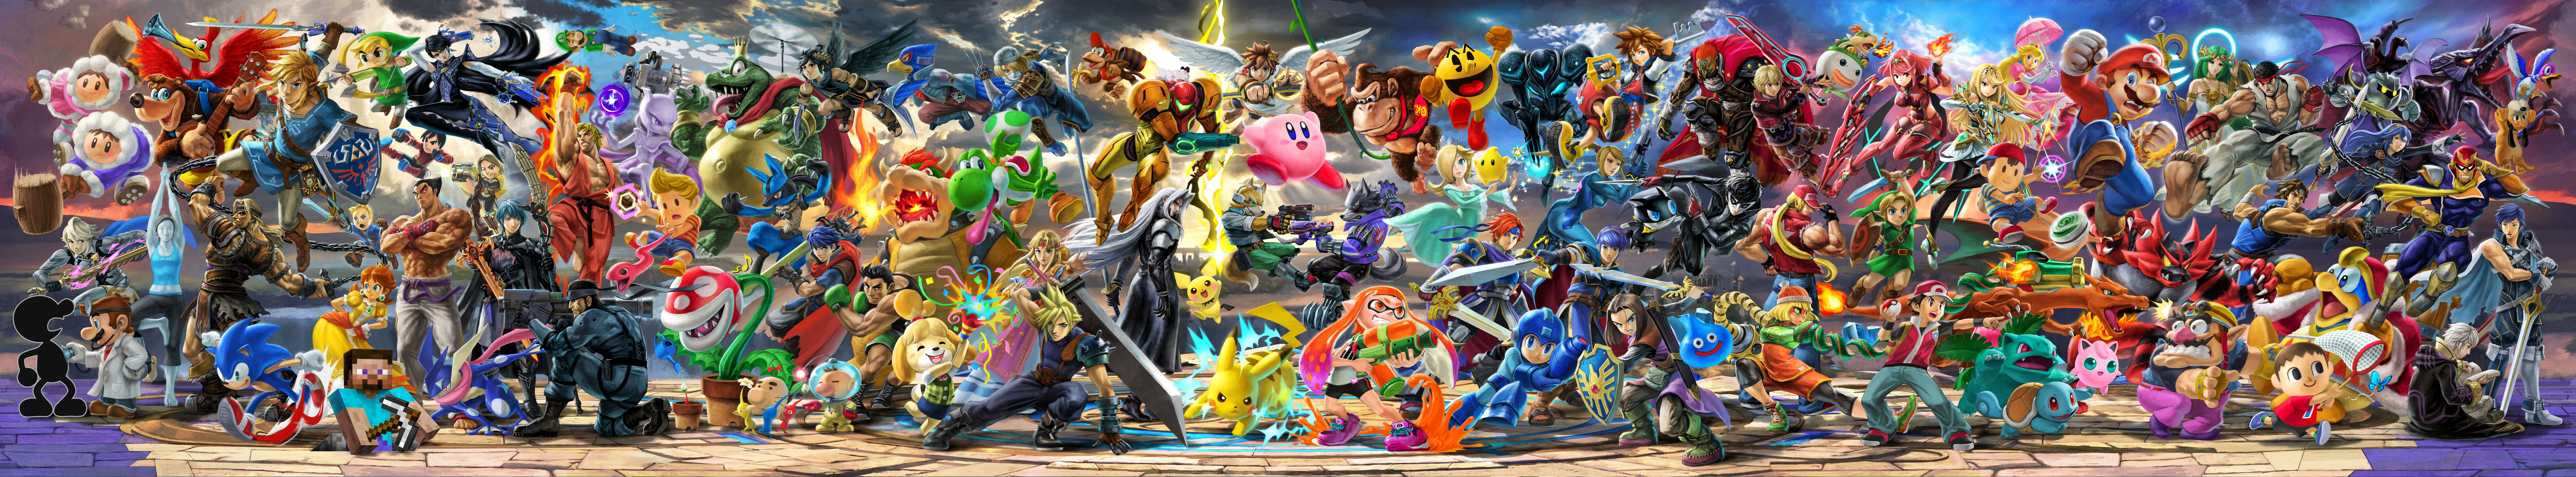 Video Game Super Smash Bros. Ultimate 8k Ultra HD Wallpaper